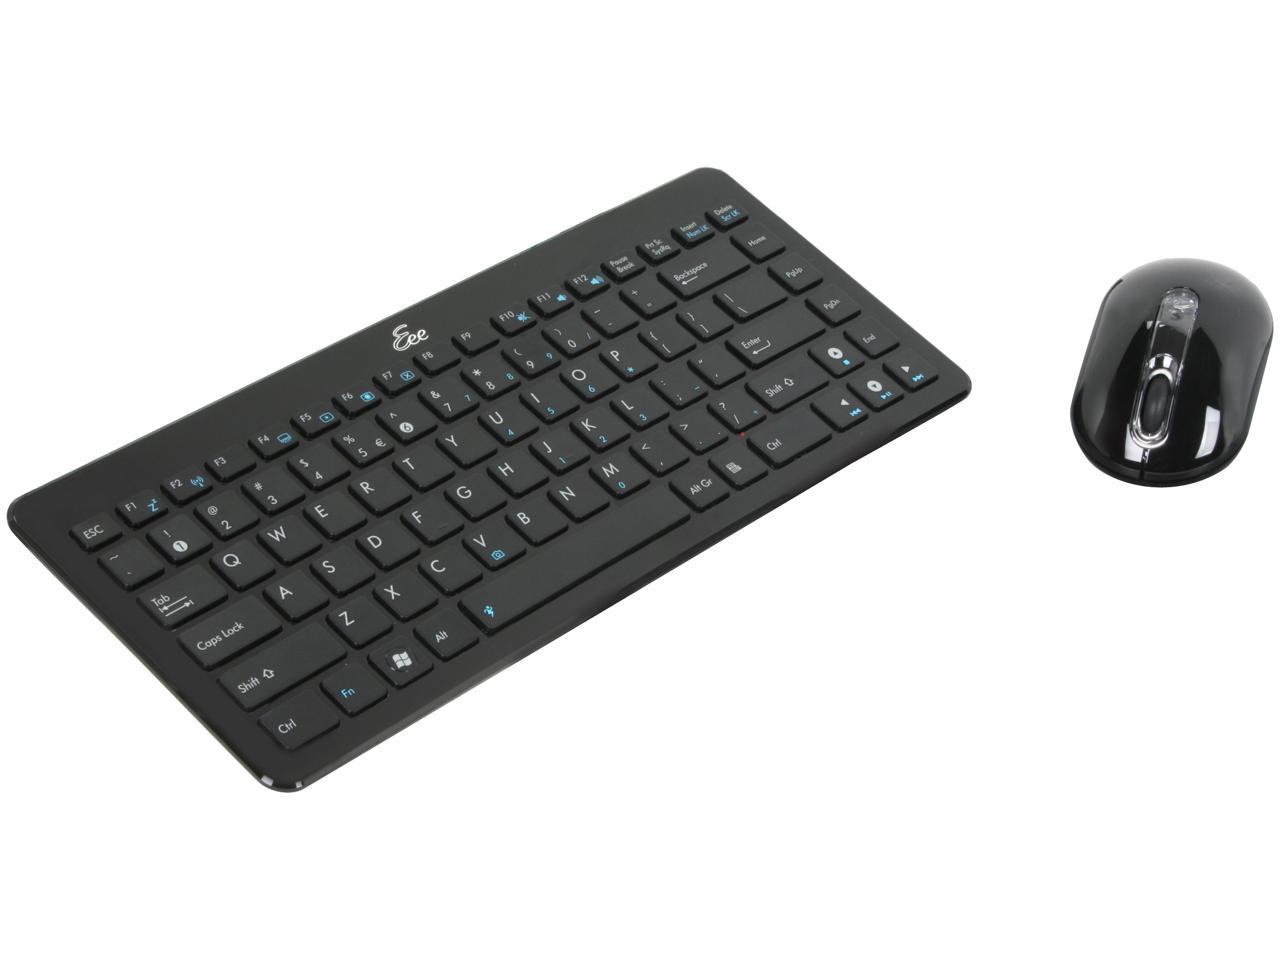 Asus 90 Xb0e00km Glittery Black Rf 2 4ghz Wireless Eee Keyboard Mouse Set Newegg Com